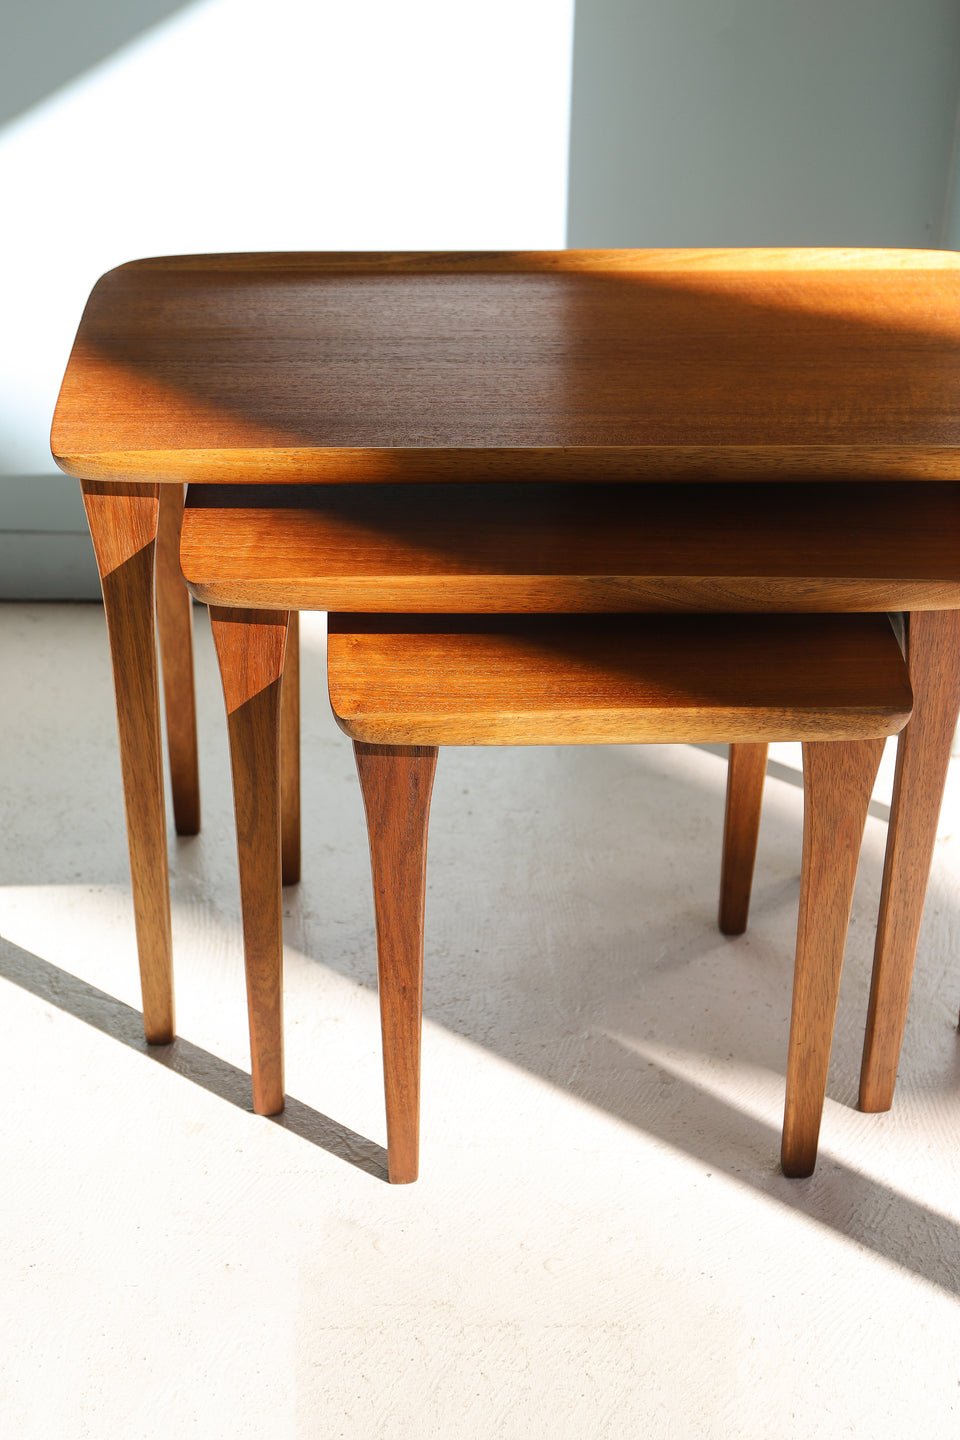 Burgess Furniture Vintage Nest Table/バージェスファニチャー ネストテーブル ヴィンテージ サイドテーブル